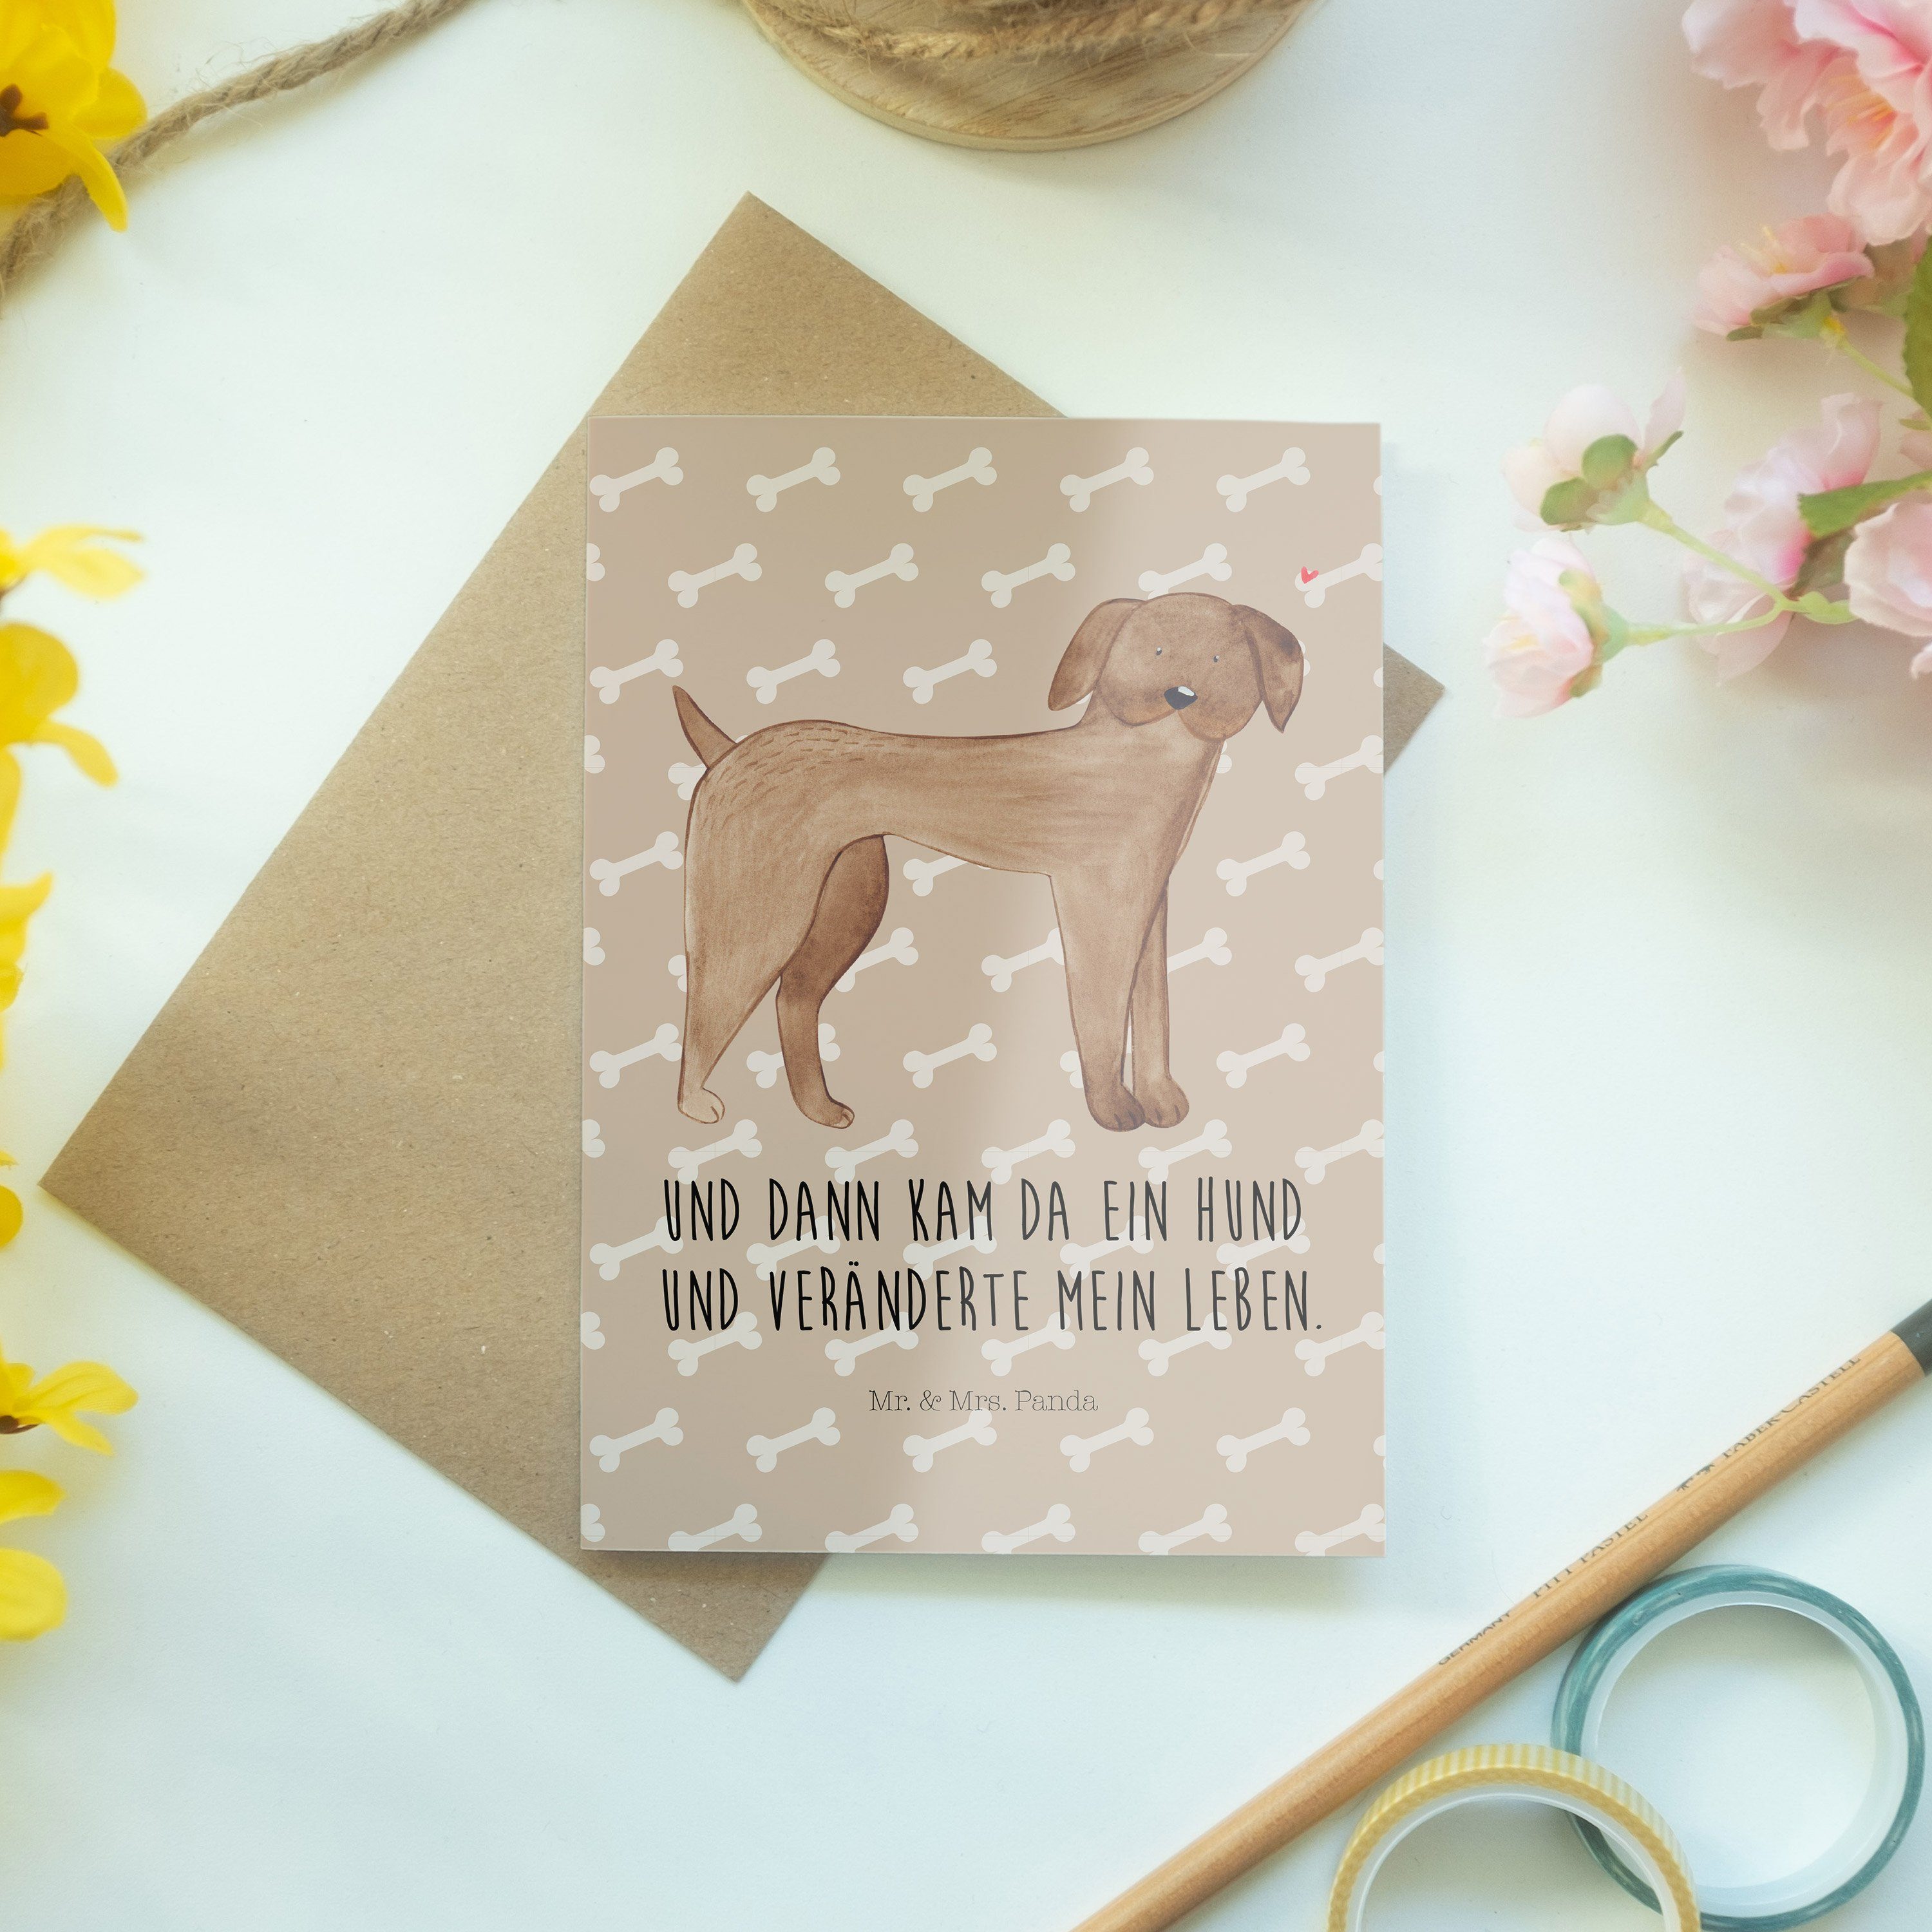 Mr. & Mrs. Panda Grußkarte Hund Hundeglück - Karte, - Einladungskarte, Glü Herz, Geschenk, Dogge